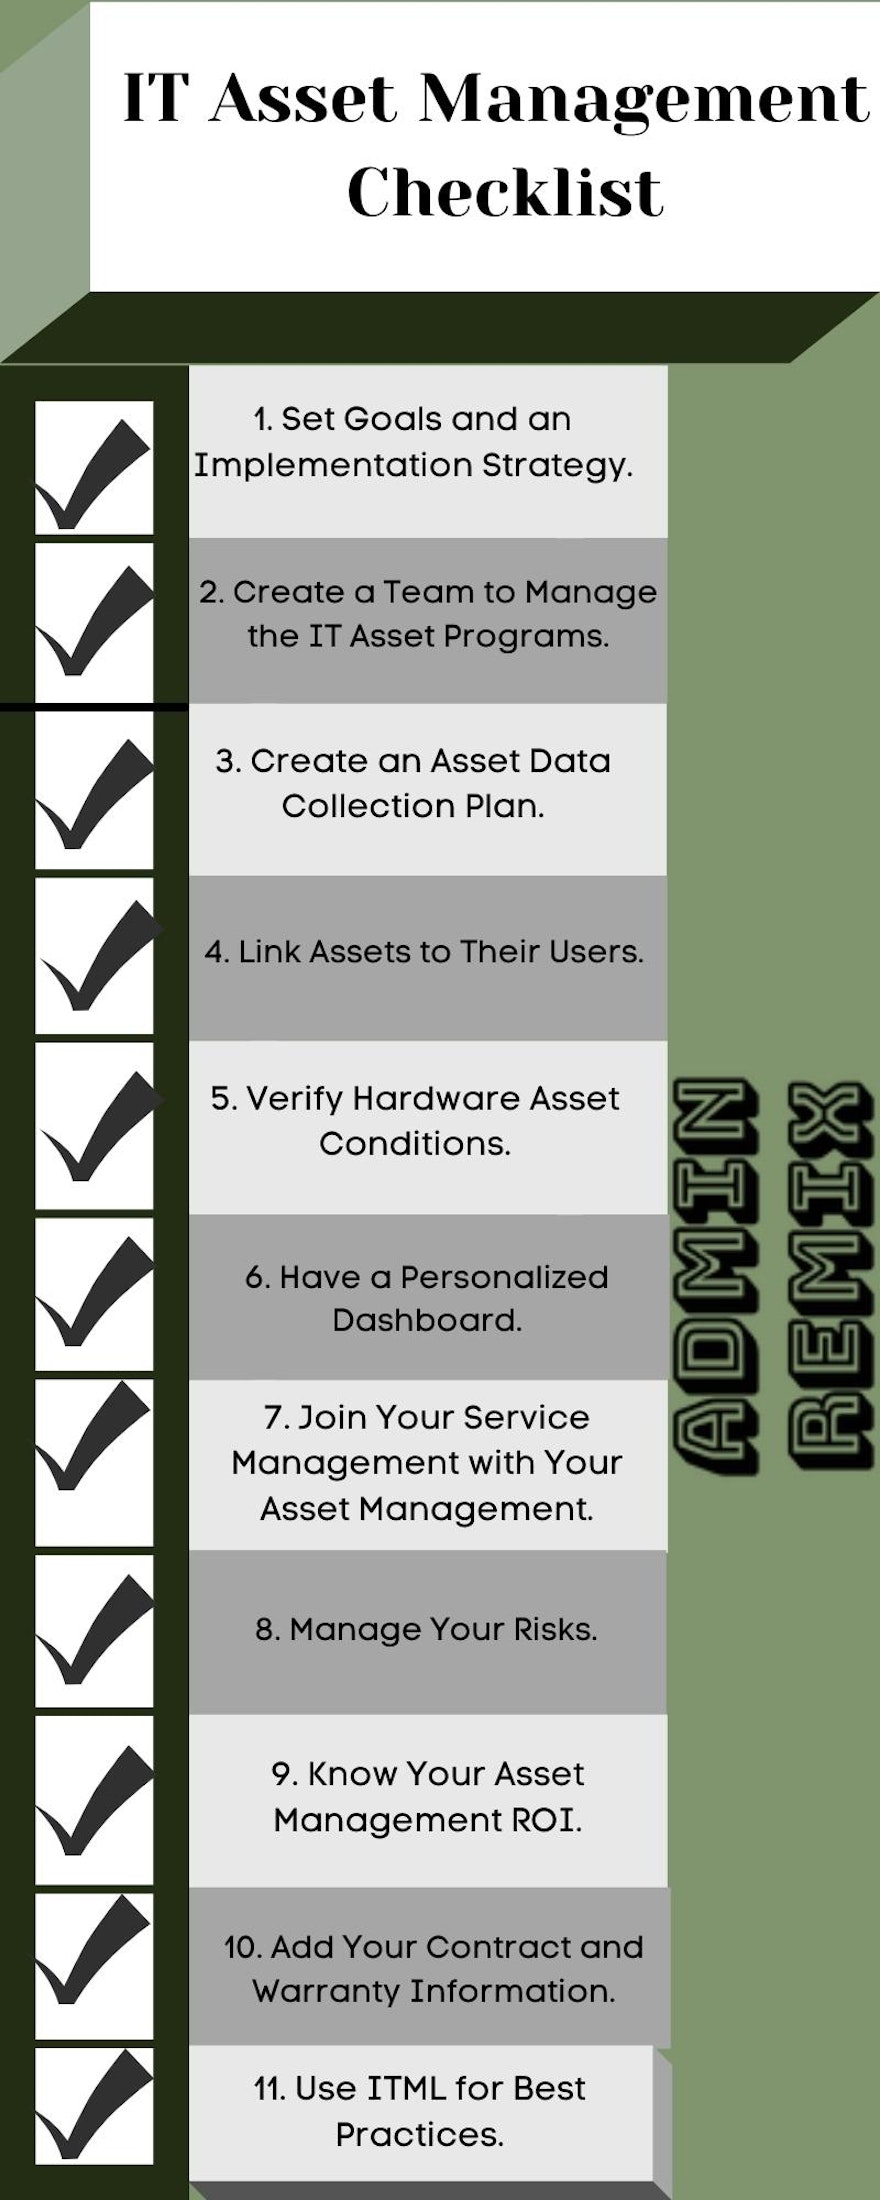 it asset management fundamentals checklist